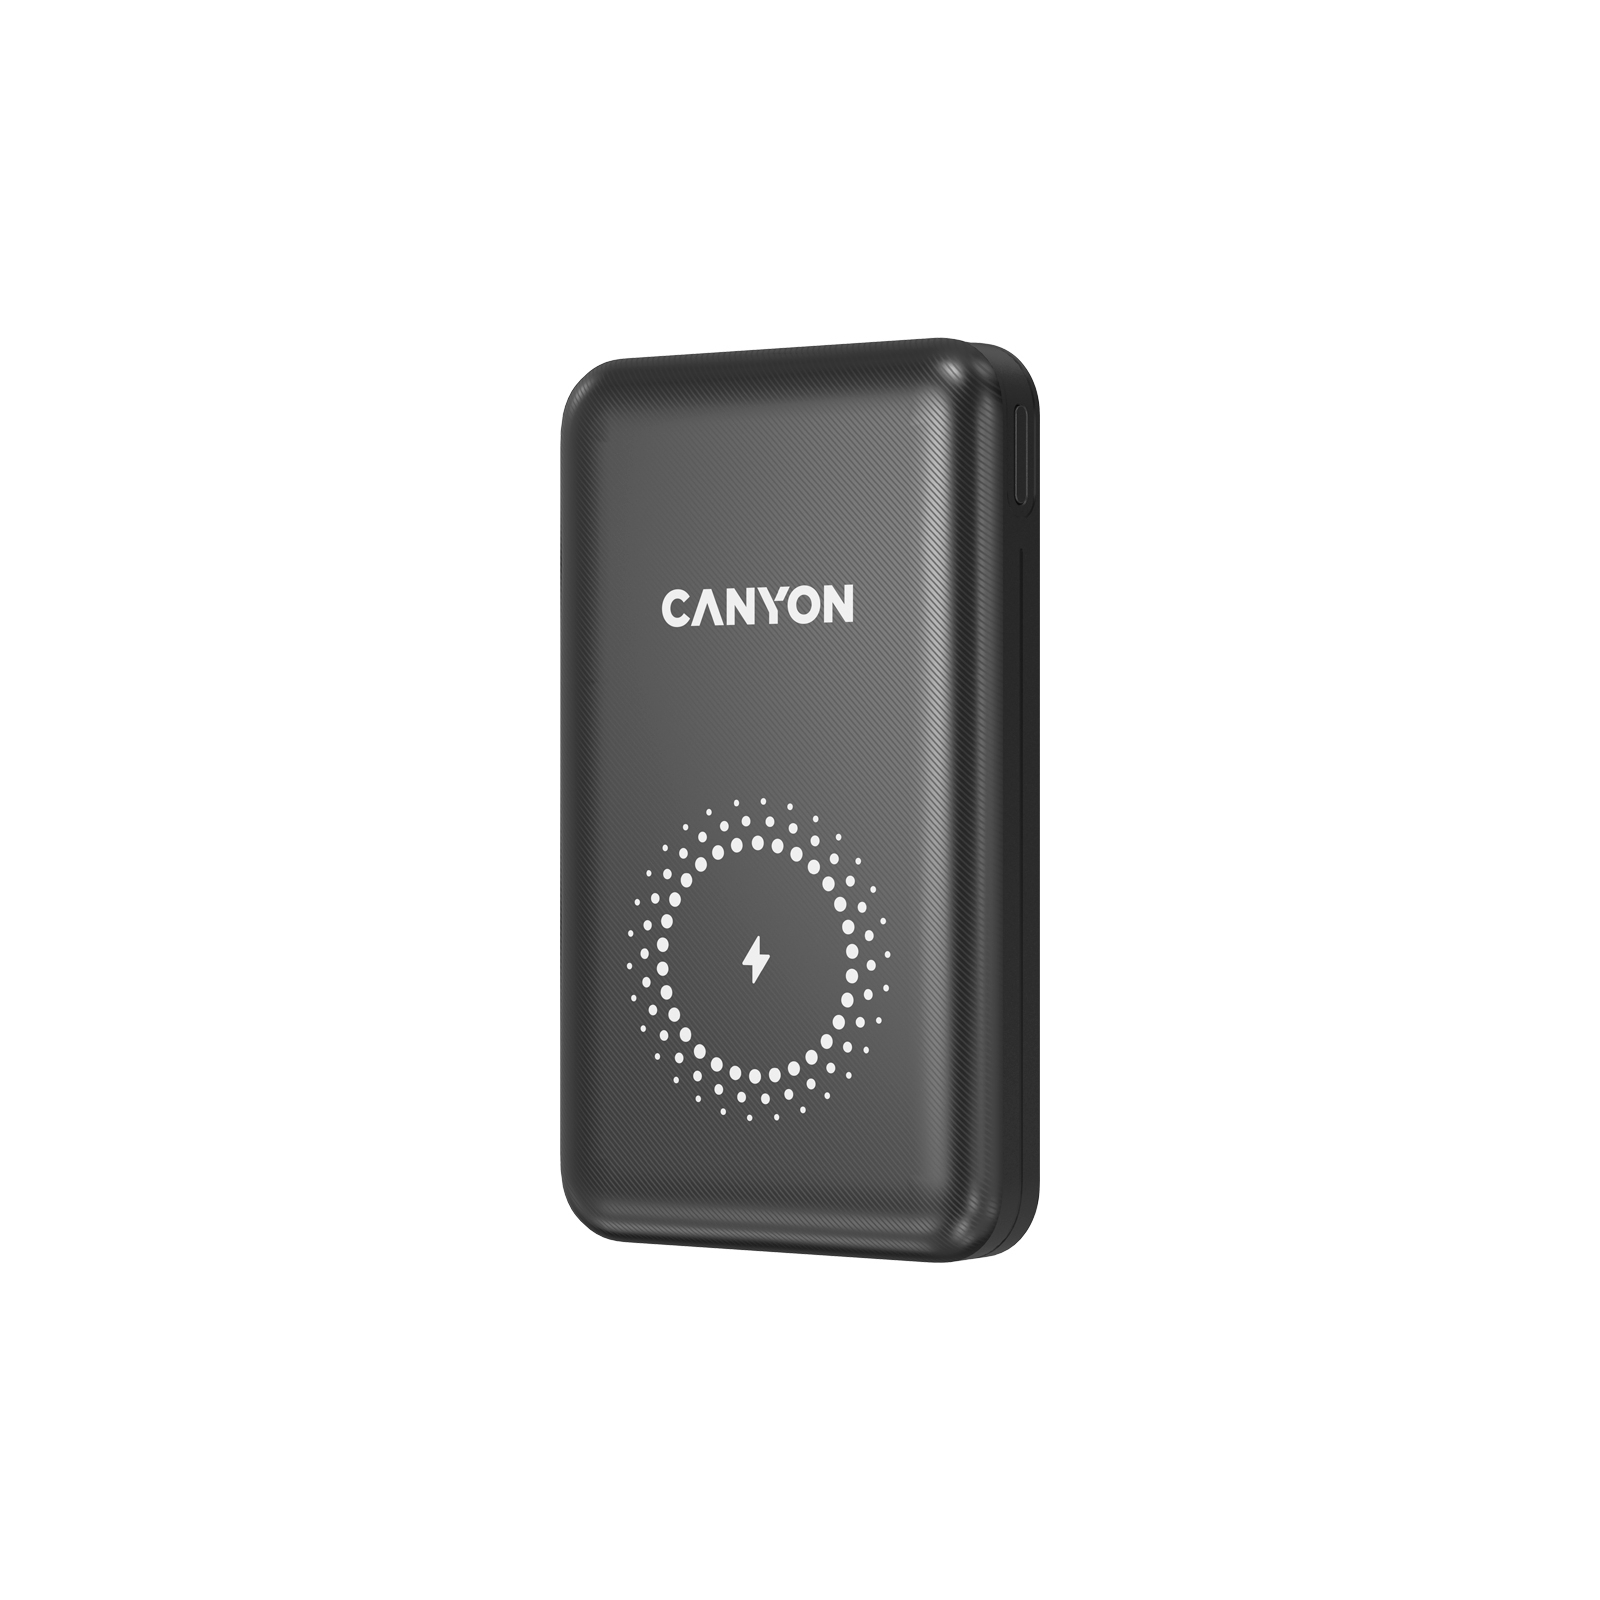 Батарея универсальная Canyon PB-1001 10000mAh, PD/18W, QC/3.0 +10W Magnet wireless charger, white (CNS-CPB1001W)